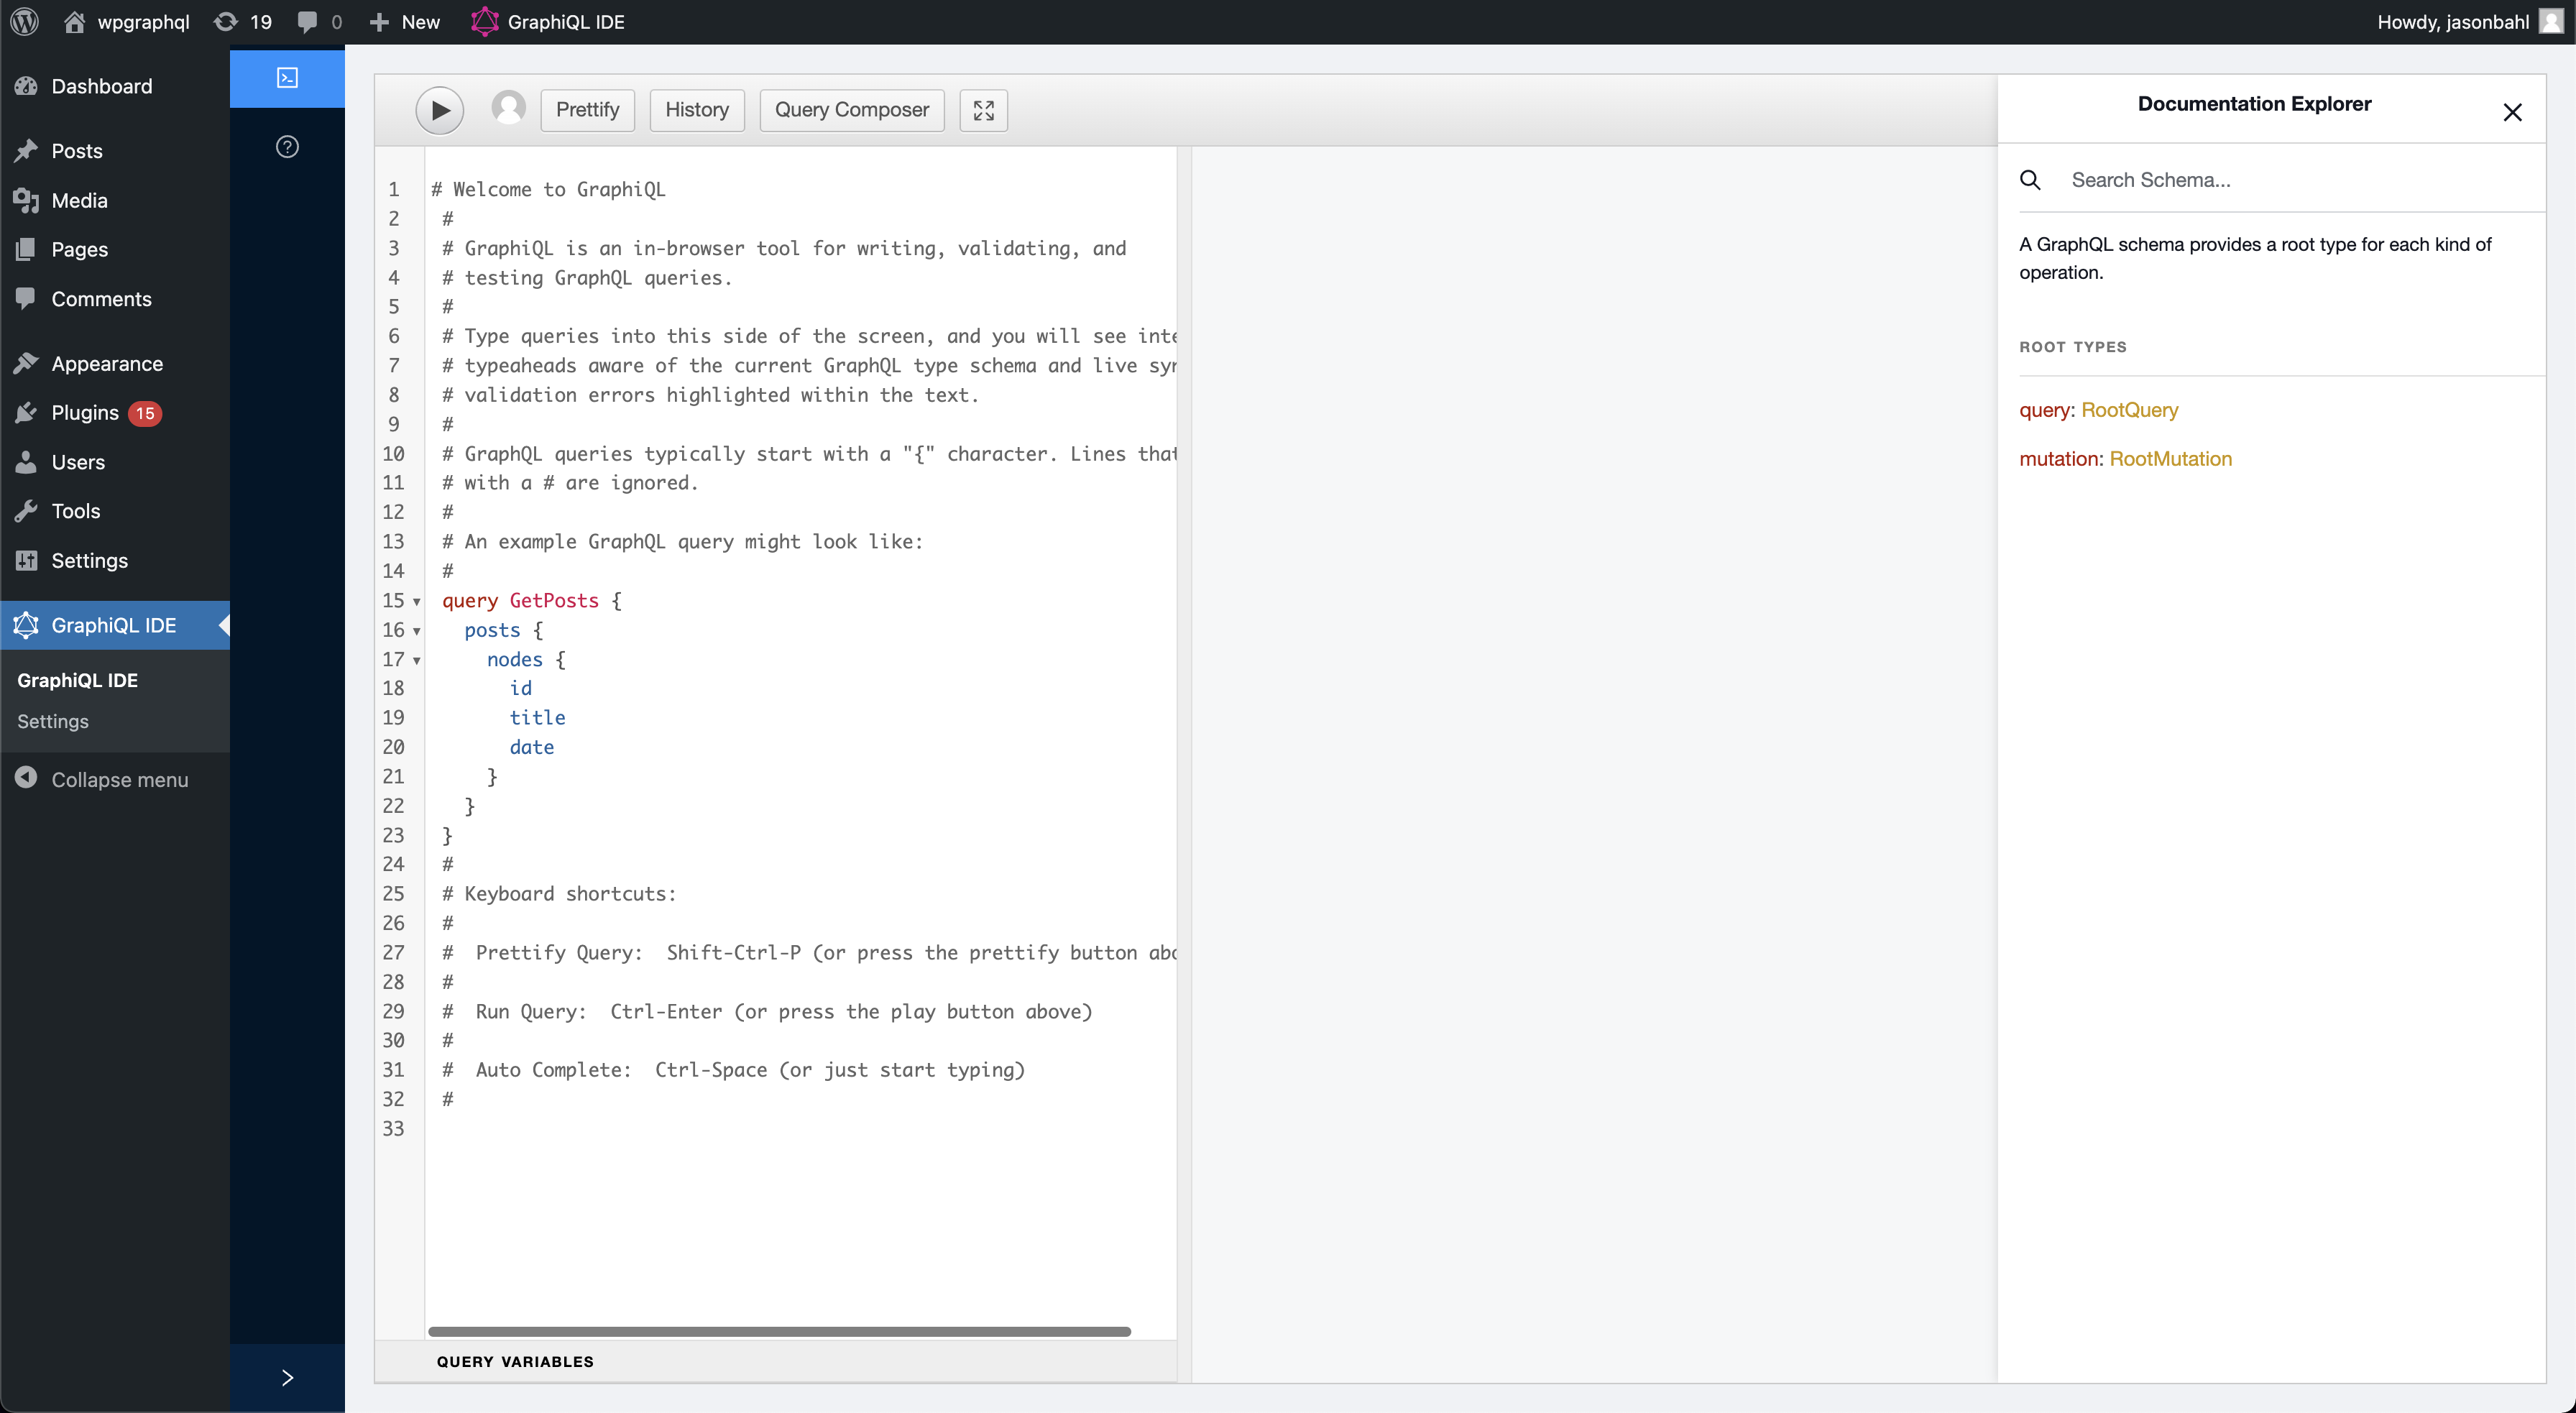 Screenshot of the GraphiQL IDE in the WordPress dashboard